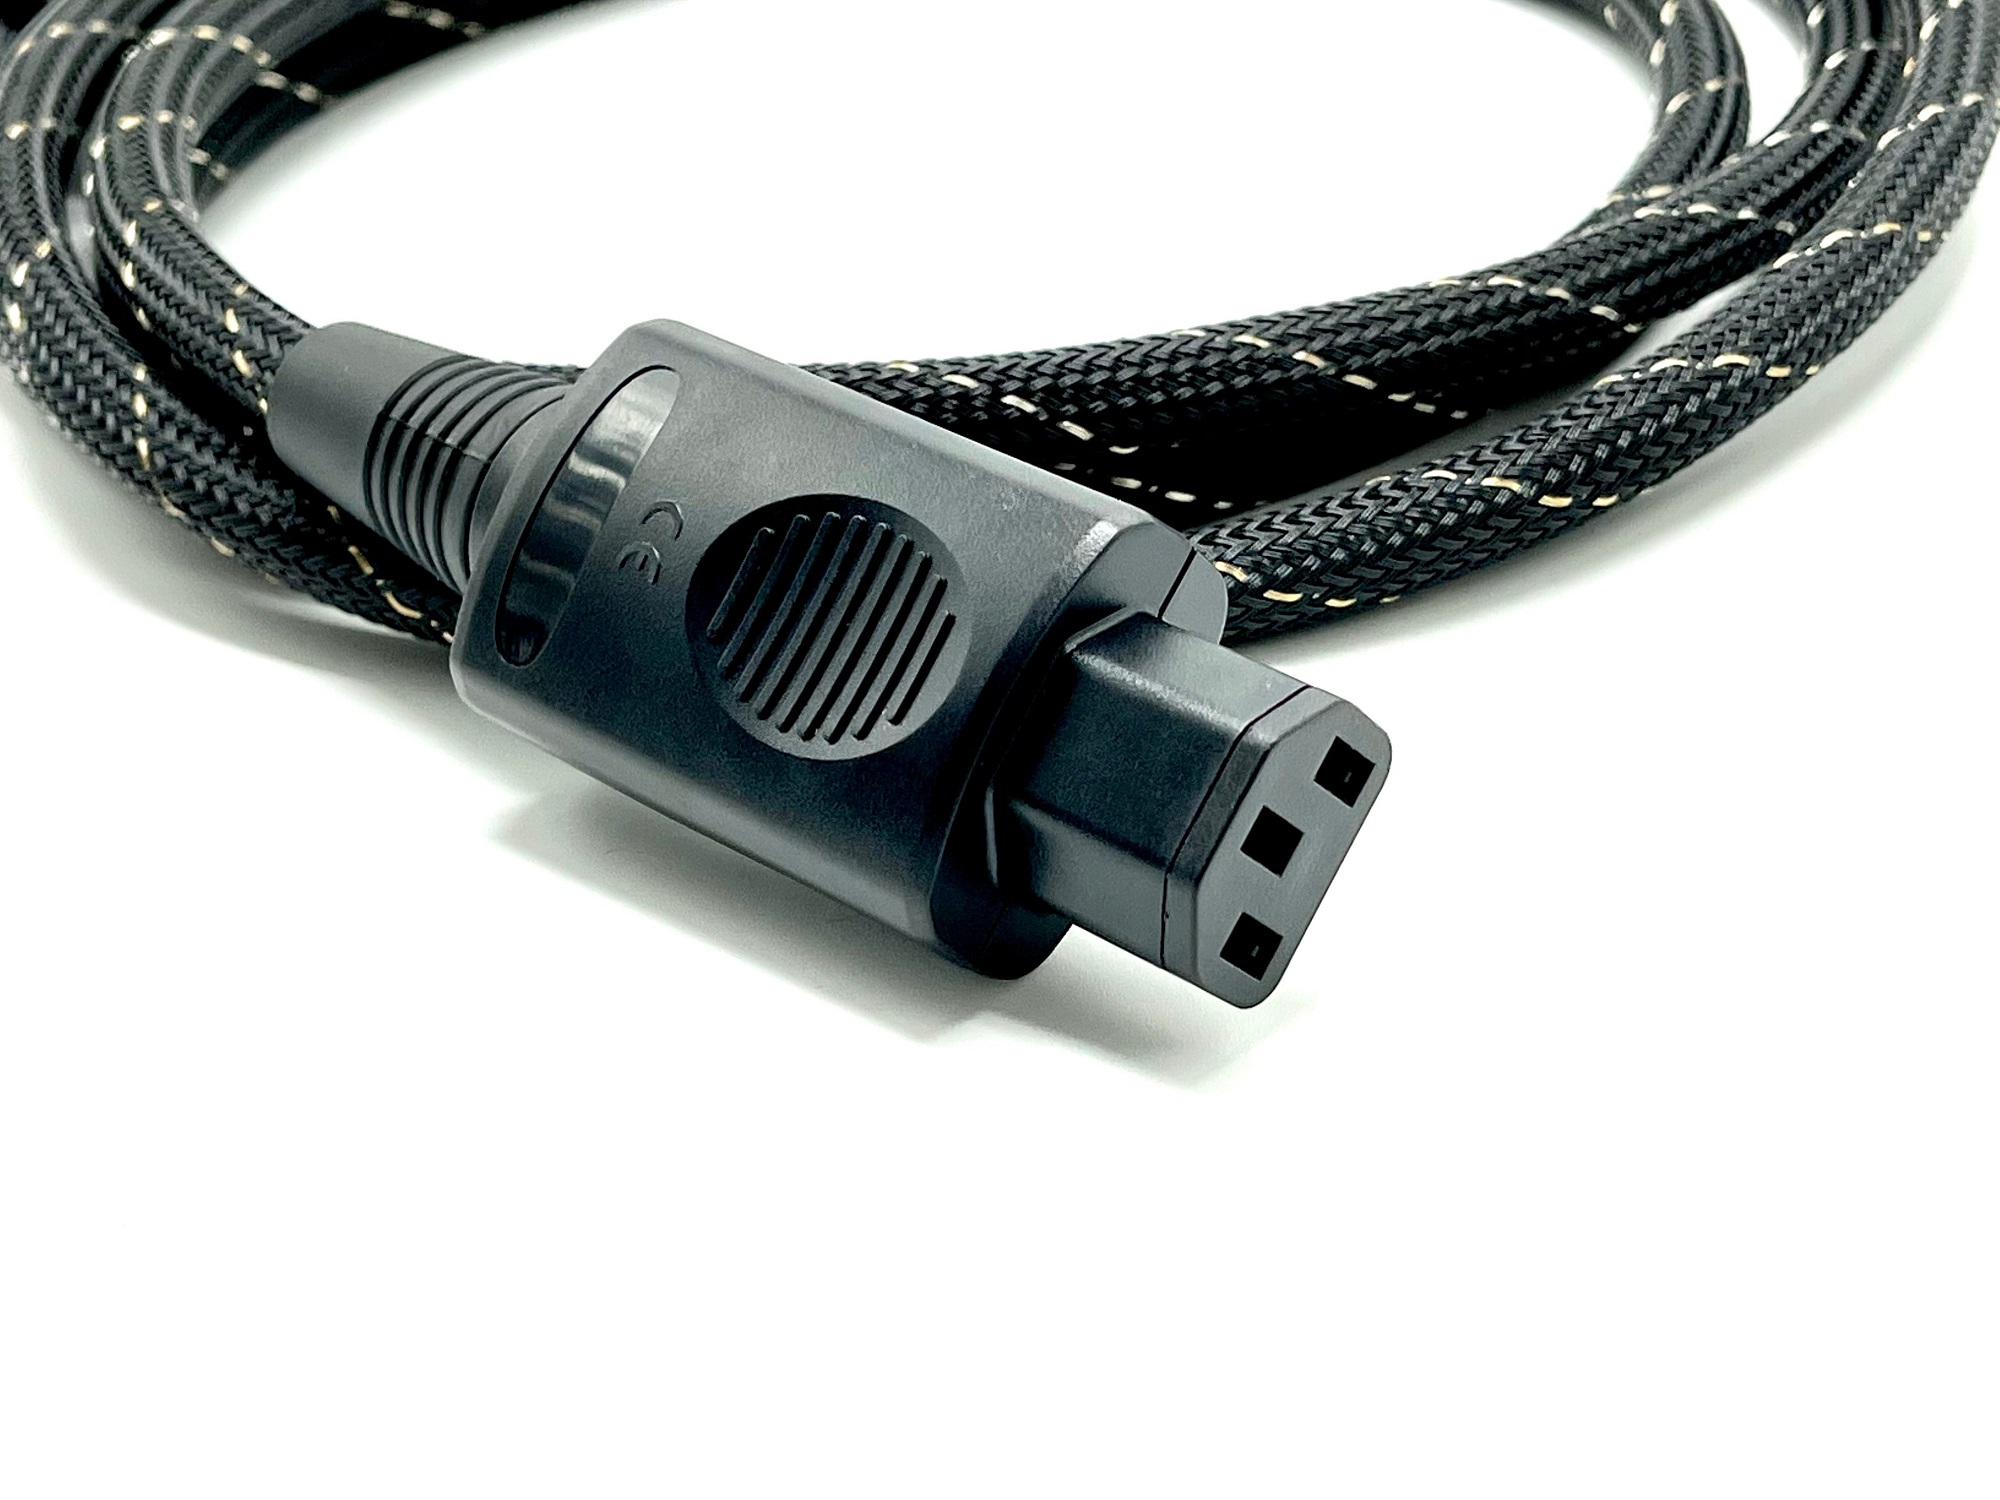 Кабель сетевой Mudra Akustik Power Cable Standard (SCH13-25) 2.5m